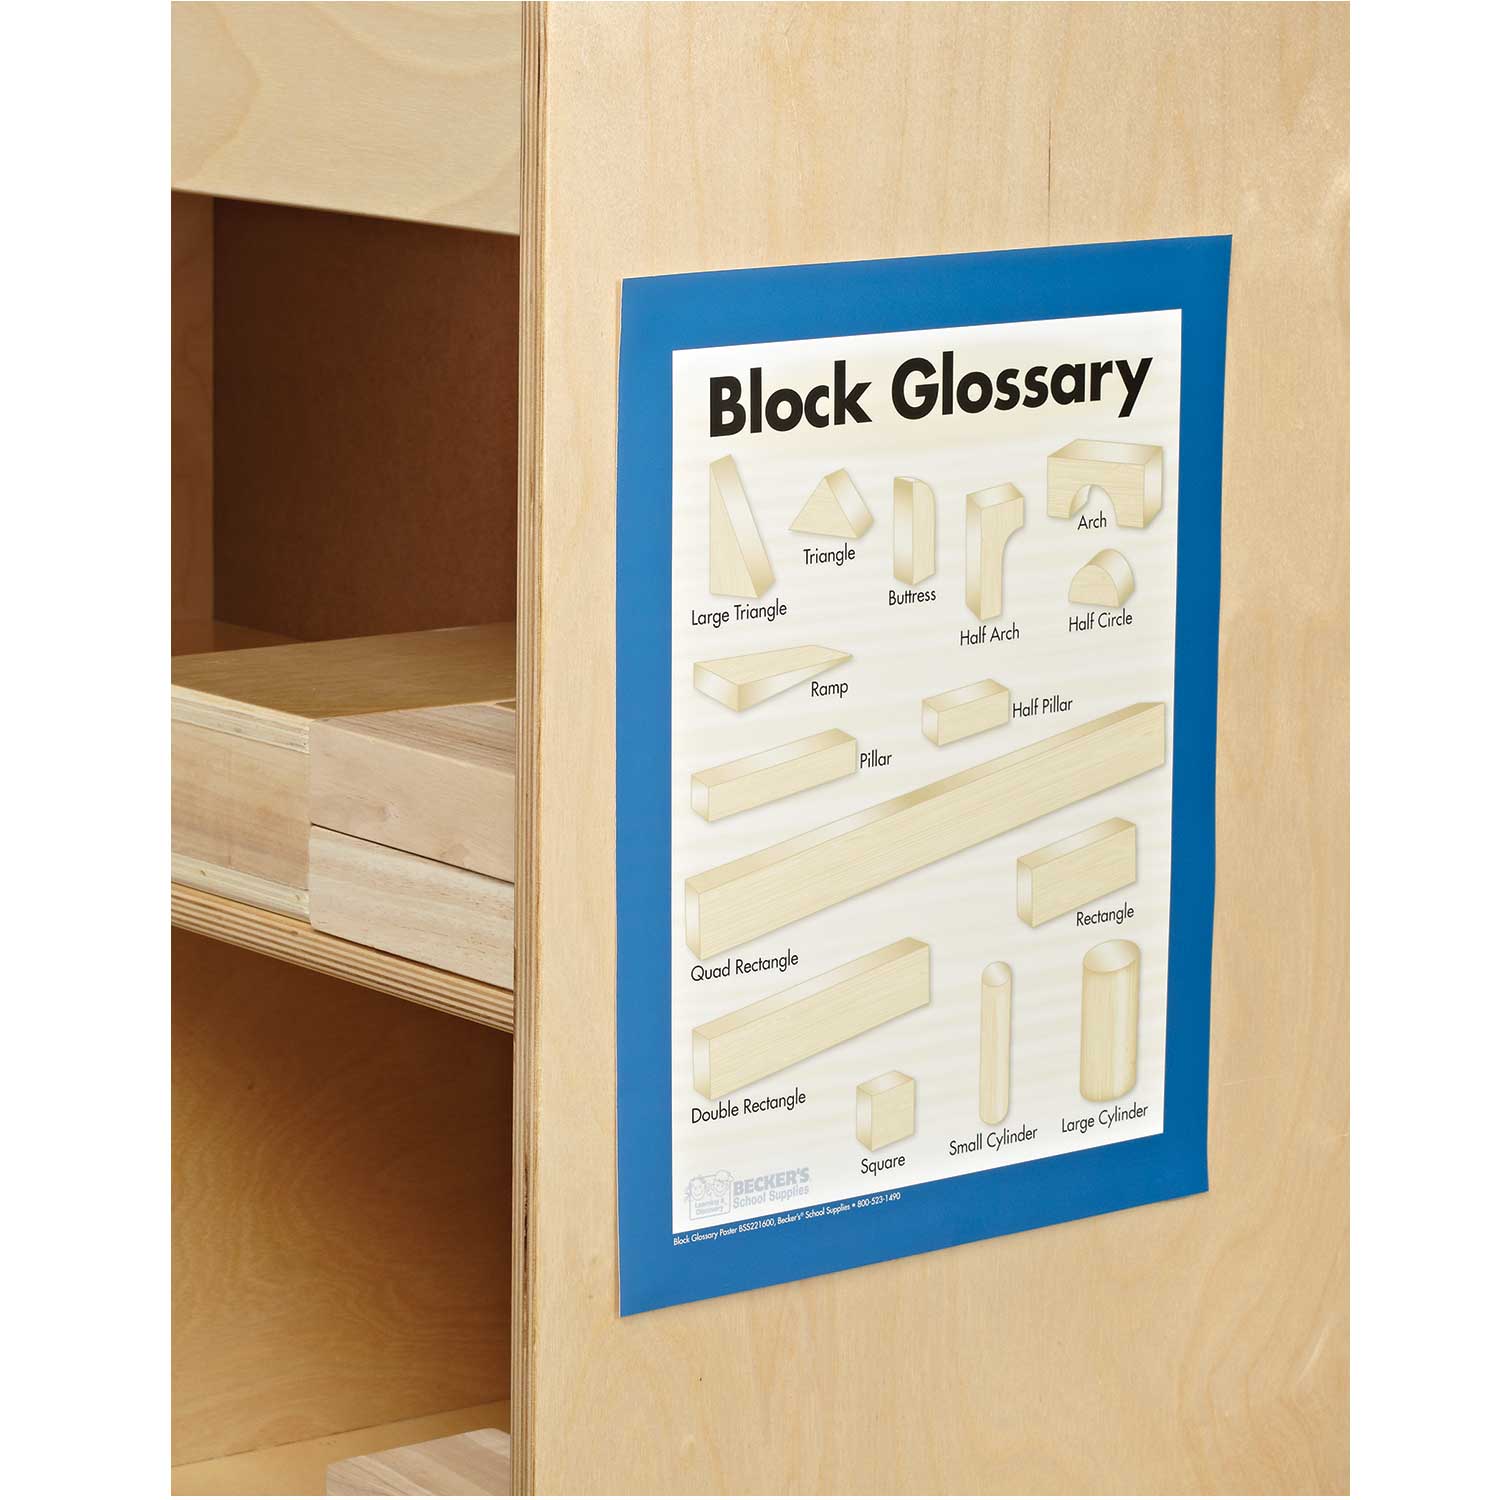 Becker's Block Labels & Poster Set